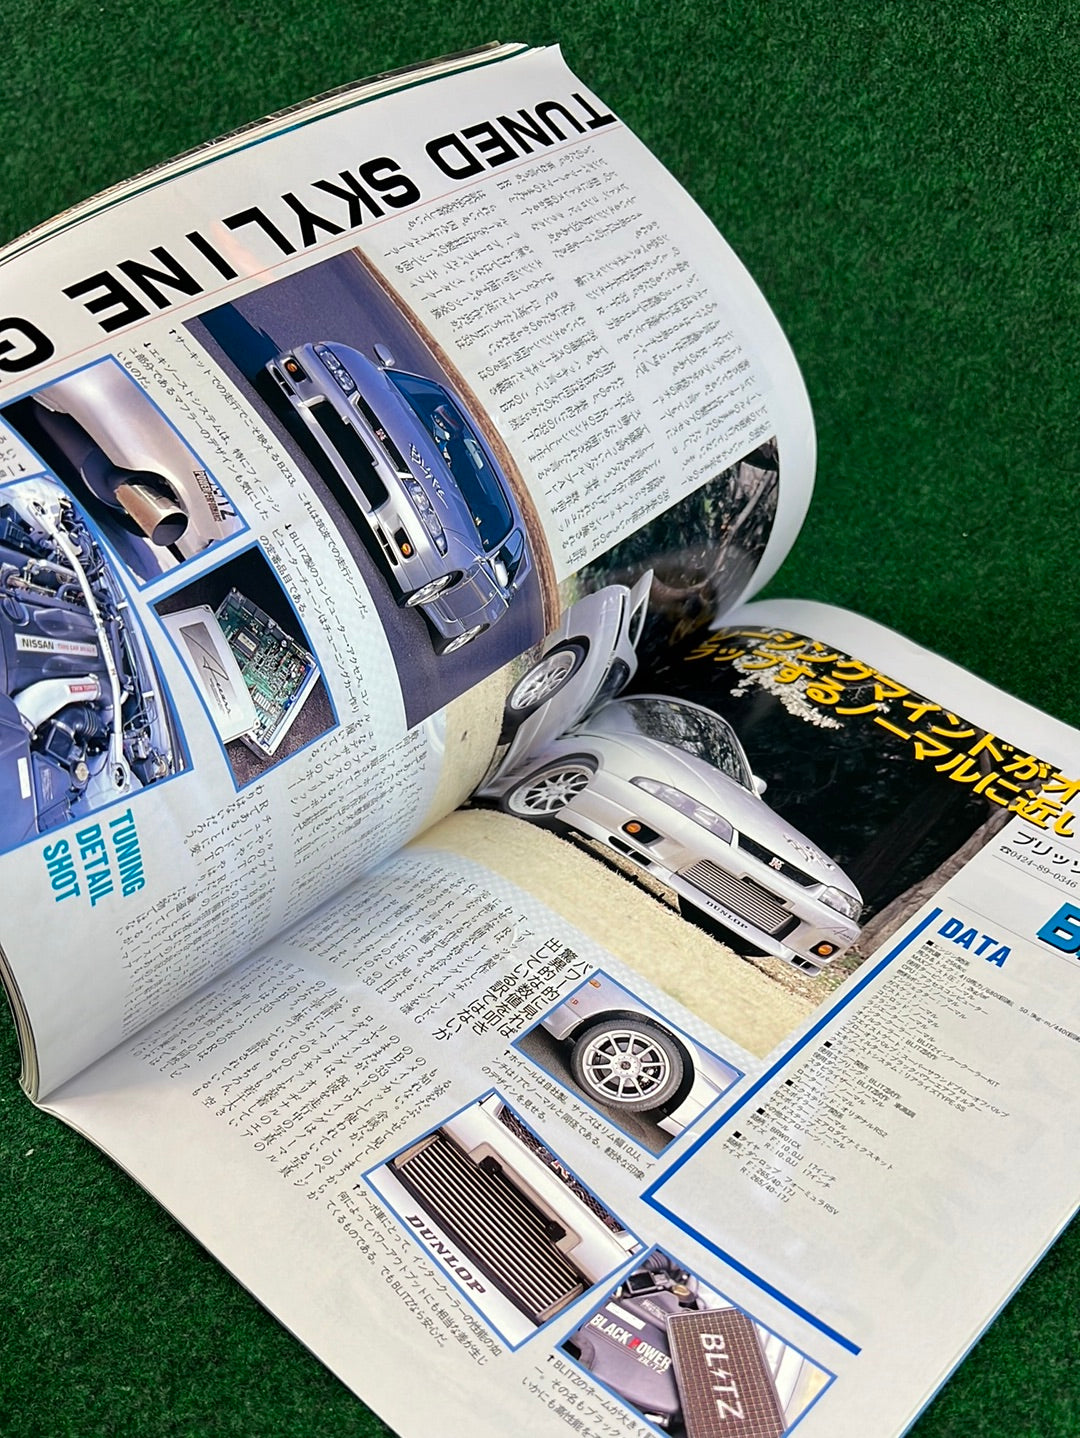 GT-R Club Magazine - Vol. 13